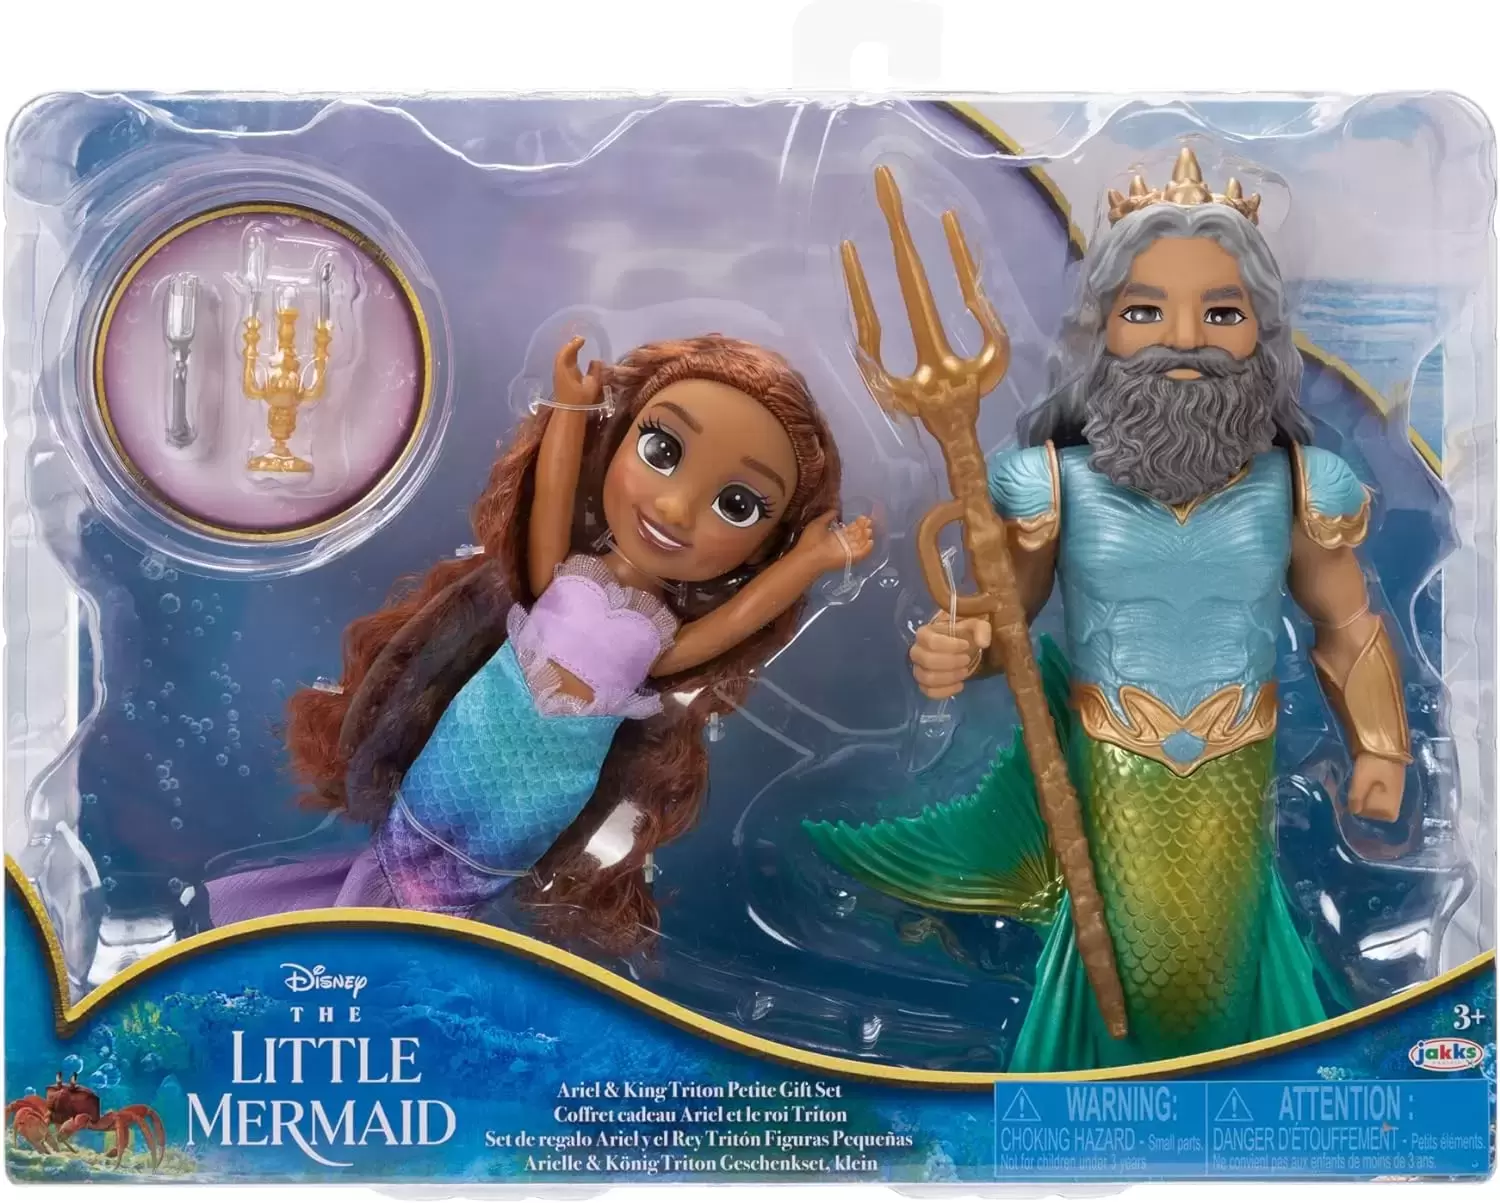 The Little Mermaid - Ariel and King Triton Petite Gift Set